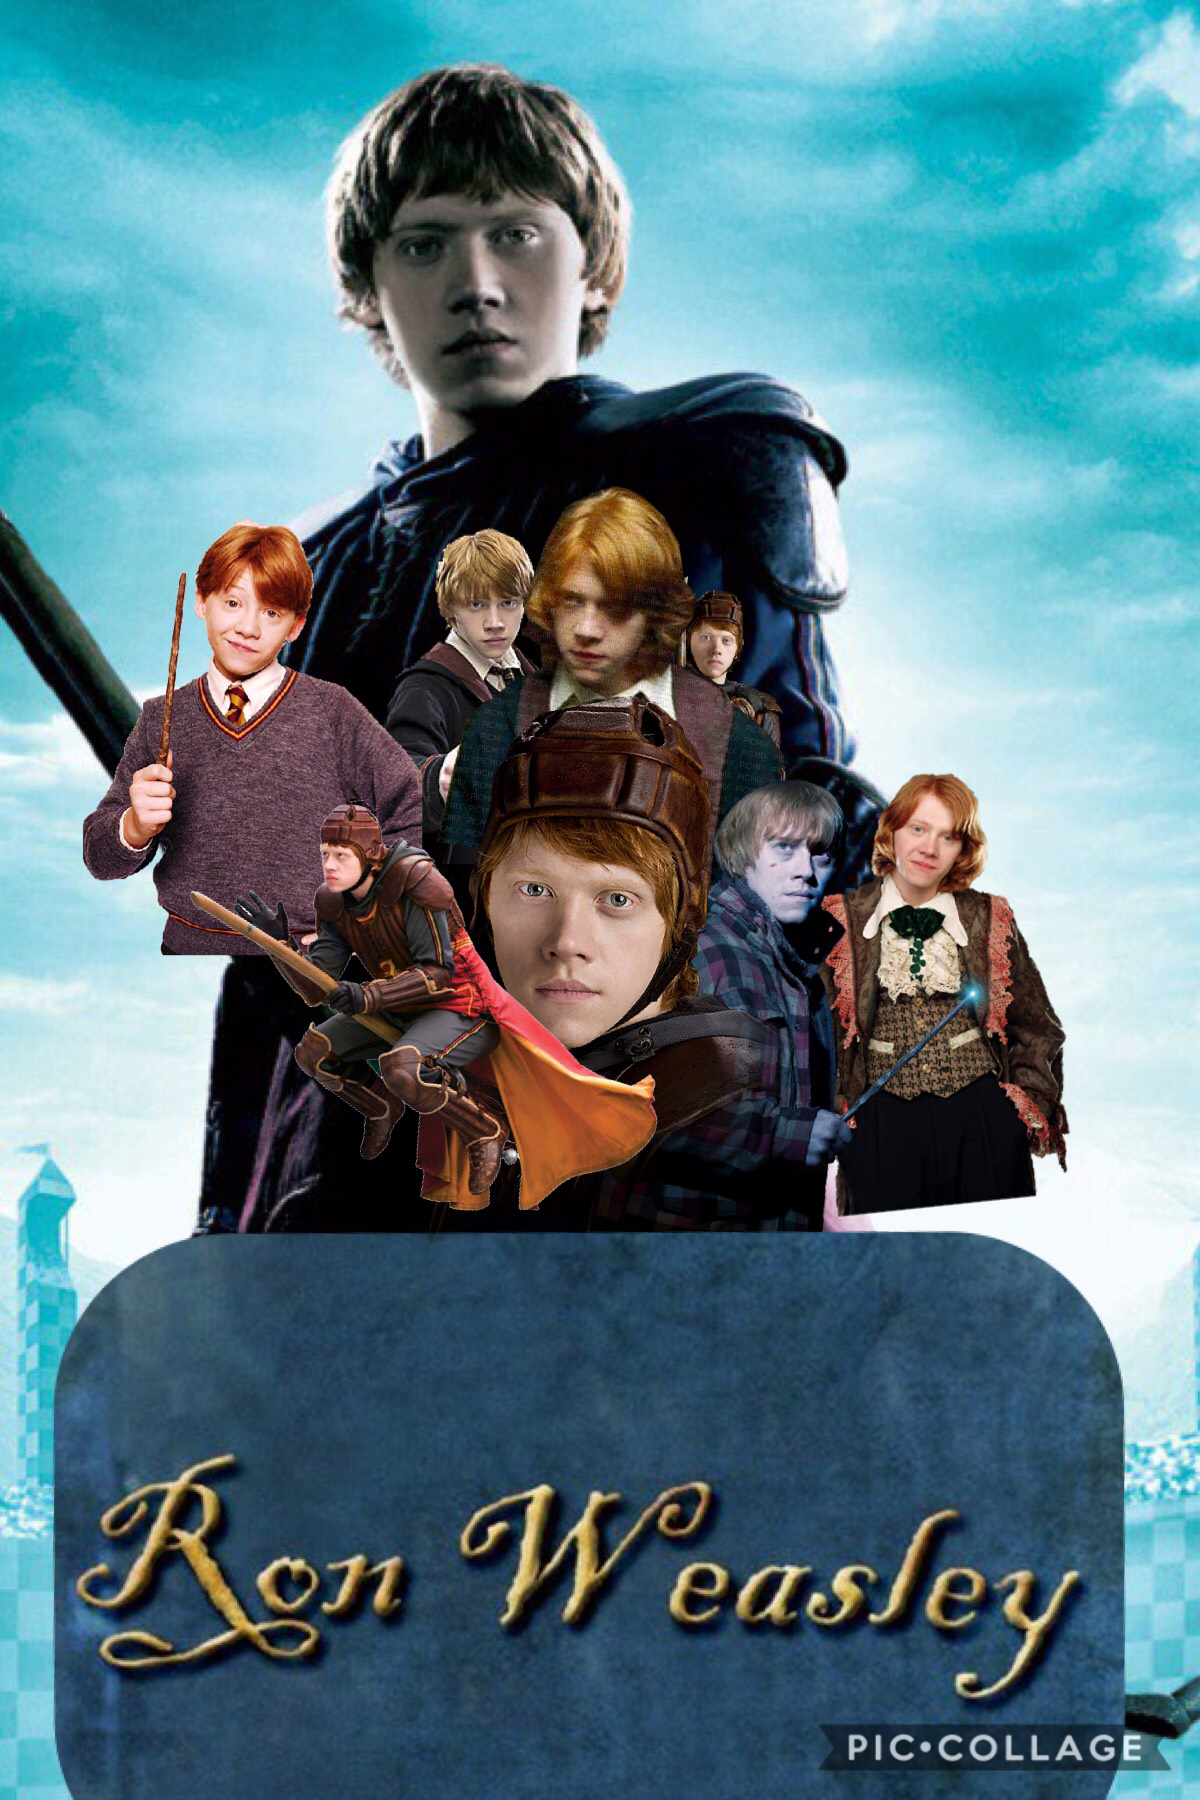 Collage by HogwartsHP_123